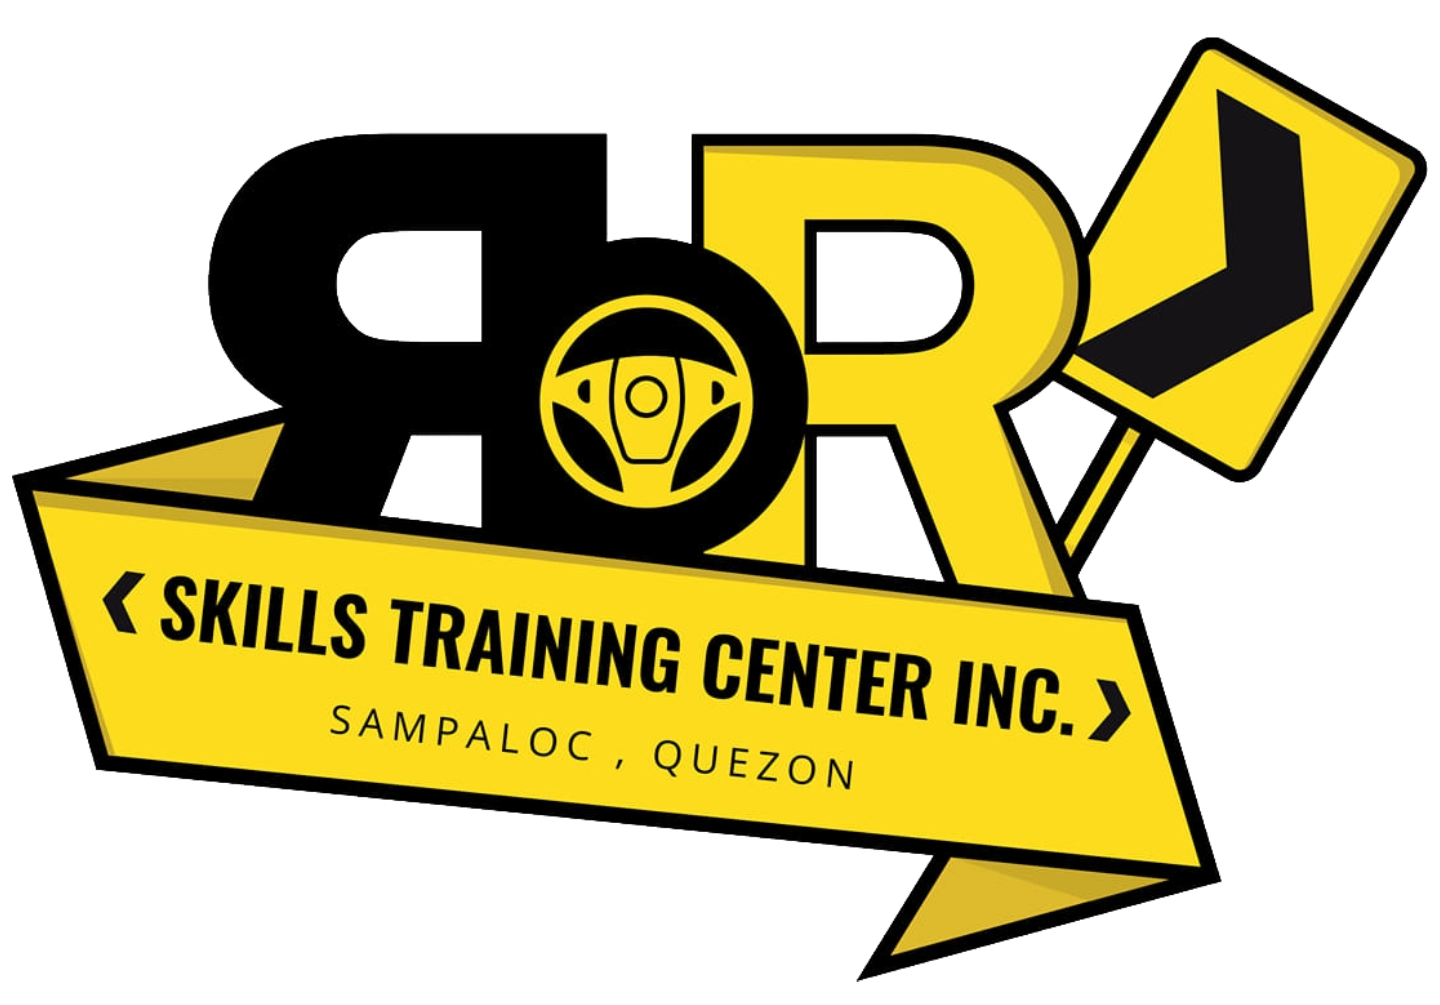 R and R Skills Training Center Inc